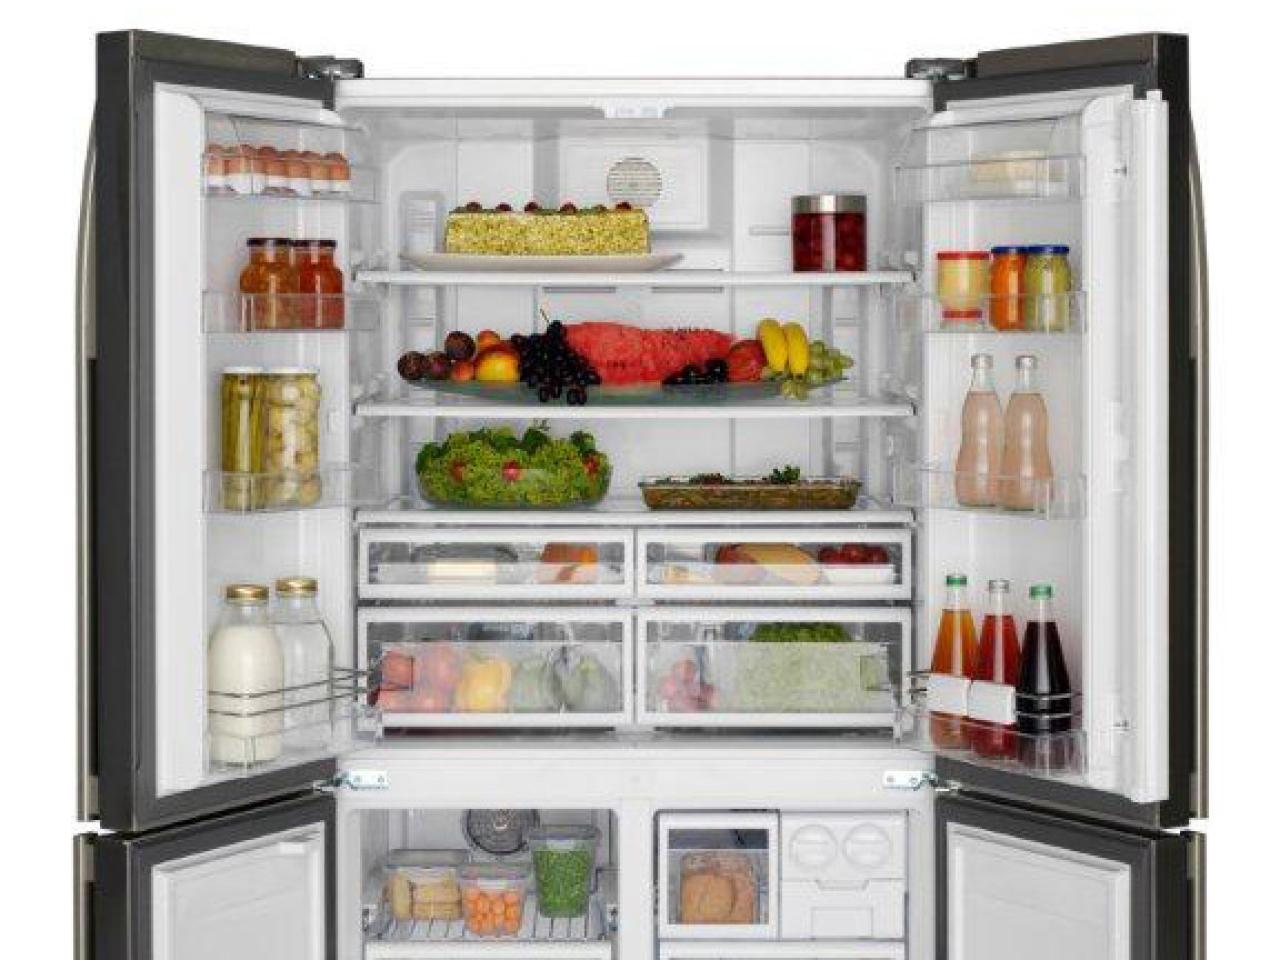 Shelf Life Of Food Refrigerator Freezer Storage Chart